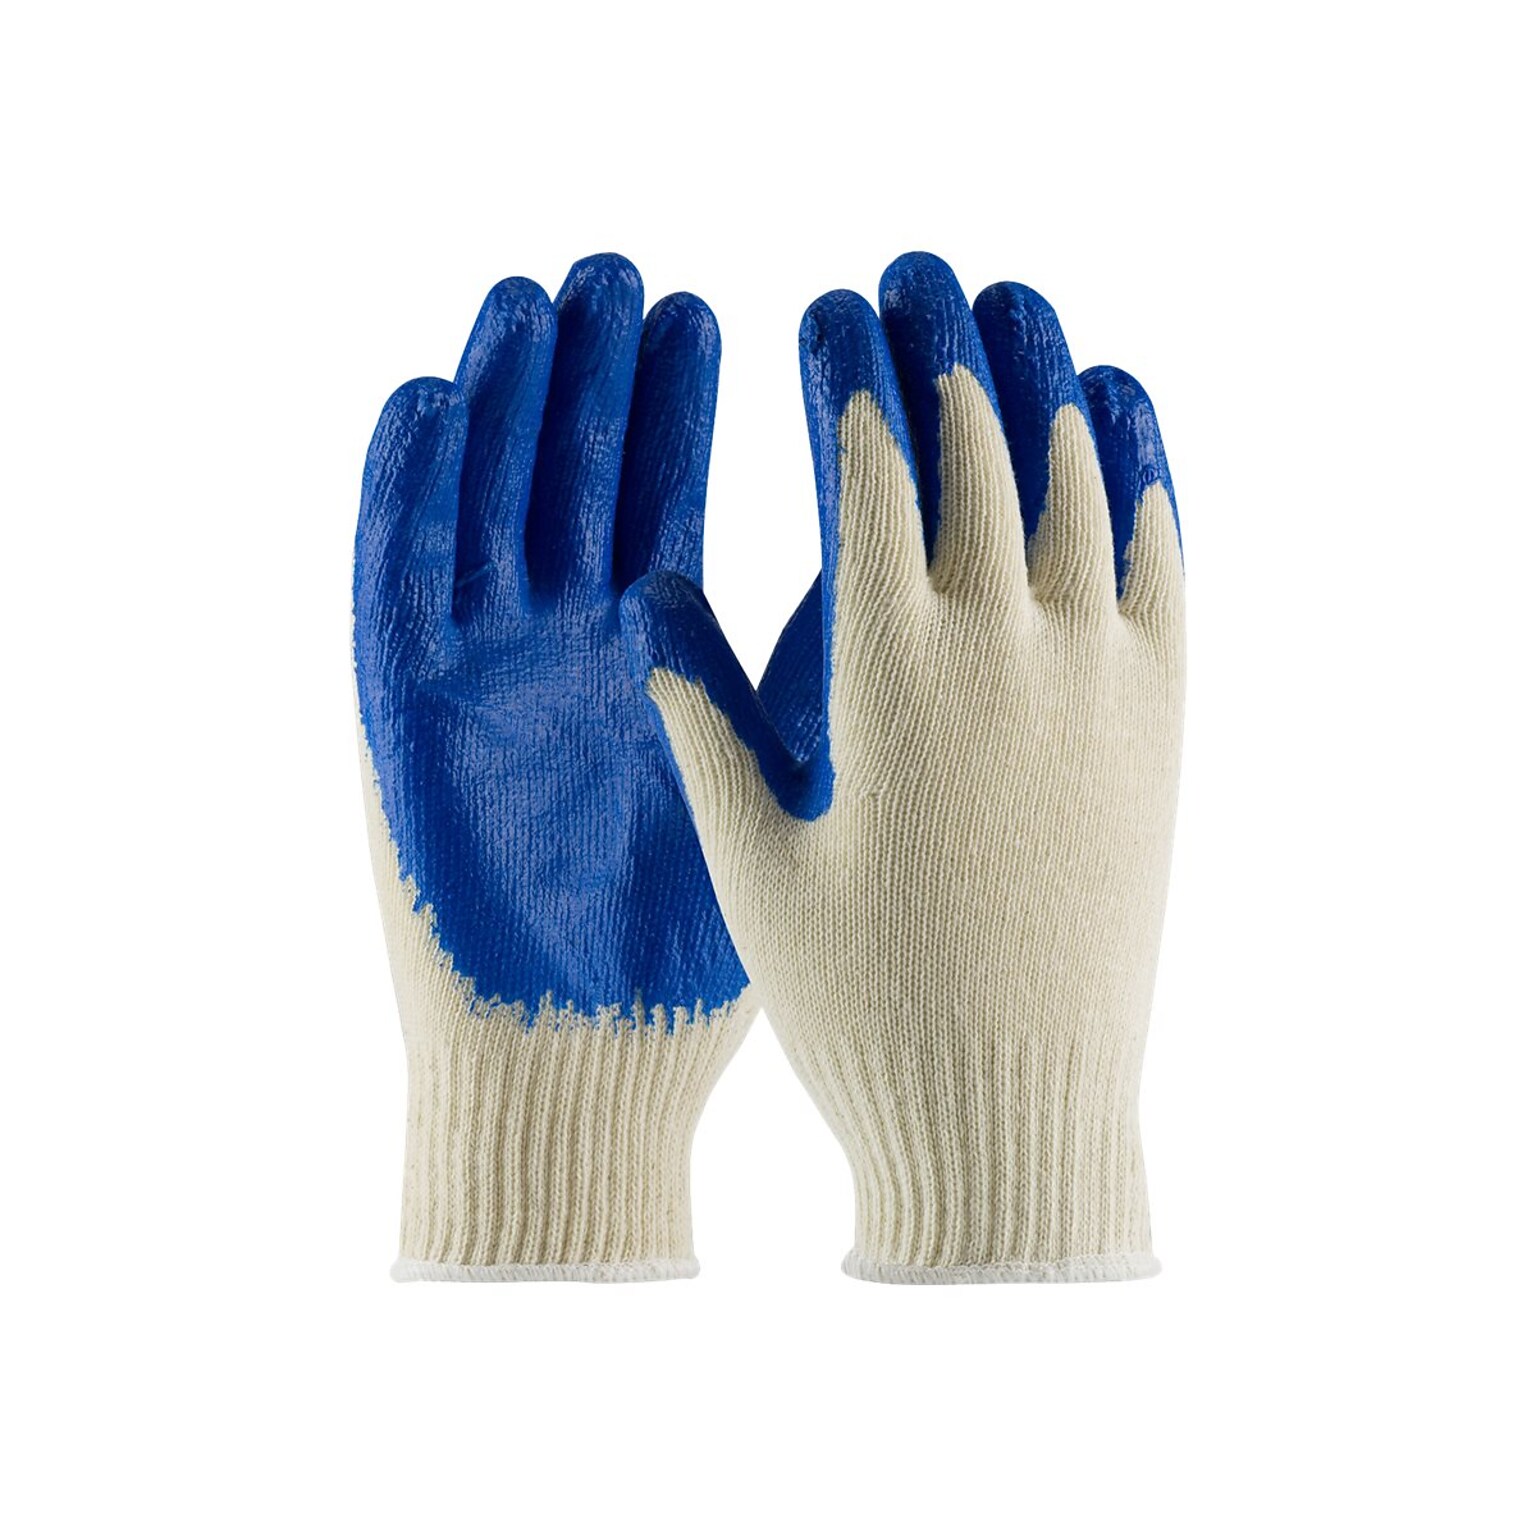 PIP 39-C122 Latex Coated Cotton/Poly Gloves, Medium, 10 Gauge, Natural/Blue, 12 Pairs(39-C122/M)